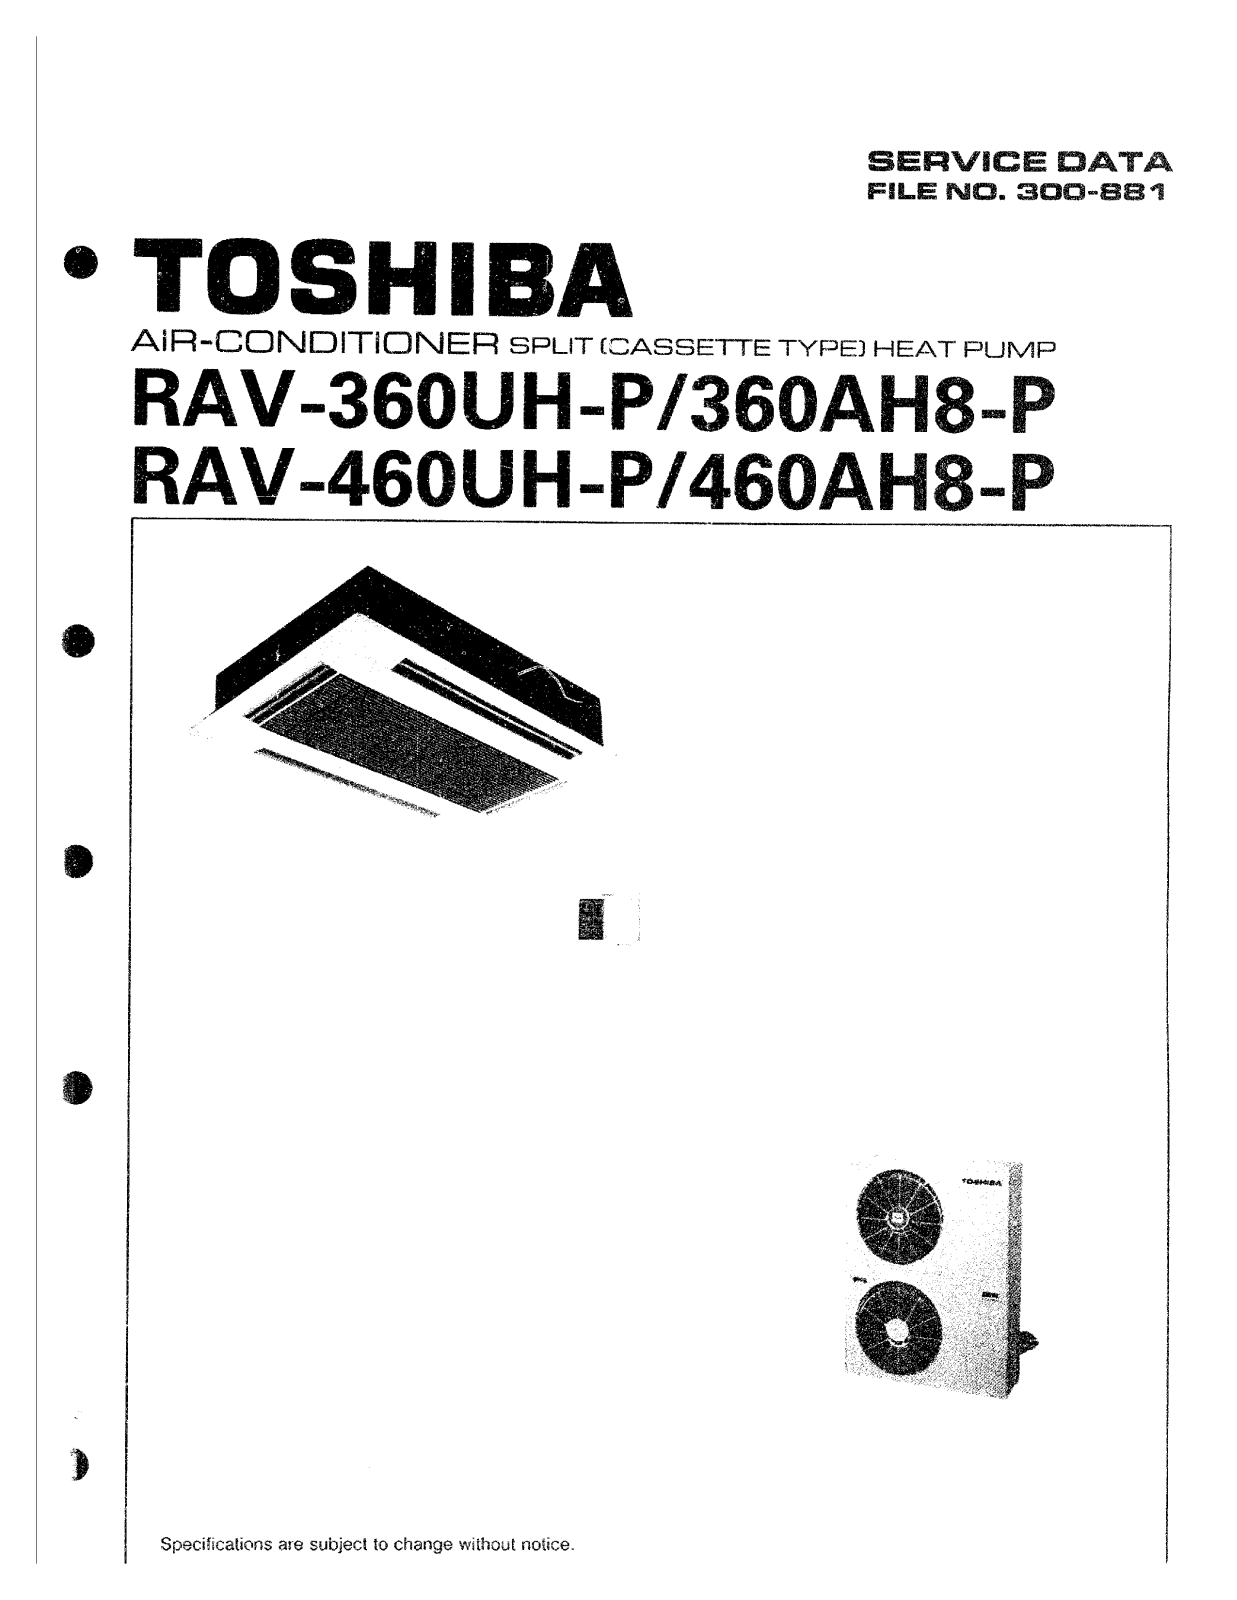 Toshiba RAV-460UH-P, RAV-460AH8-P SERVICE MANUAL